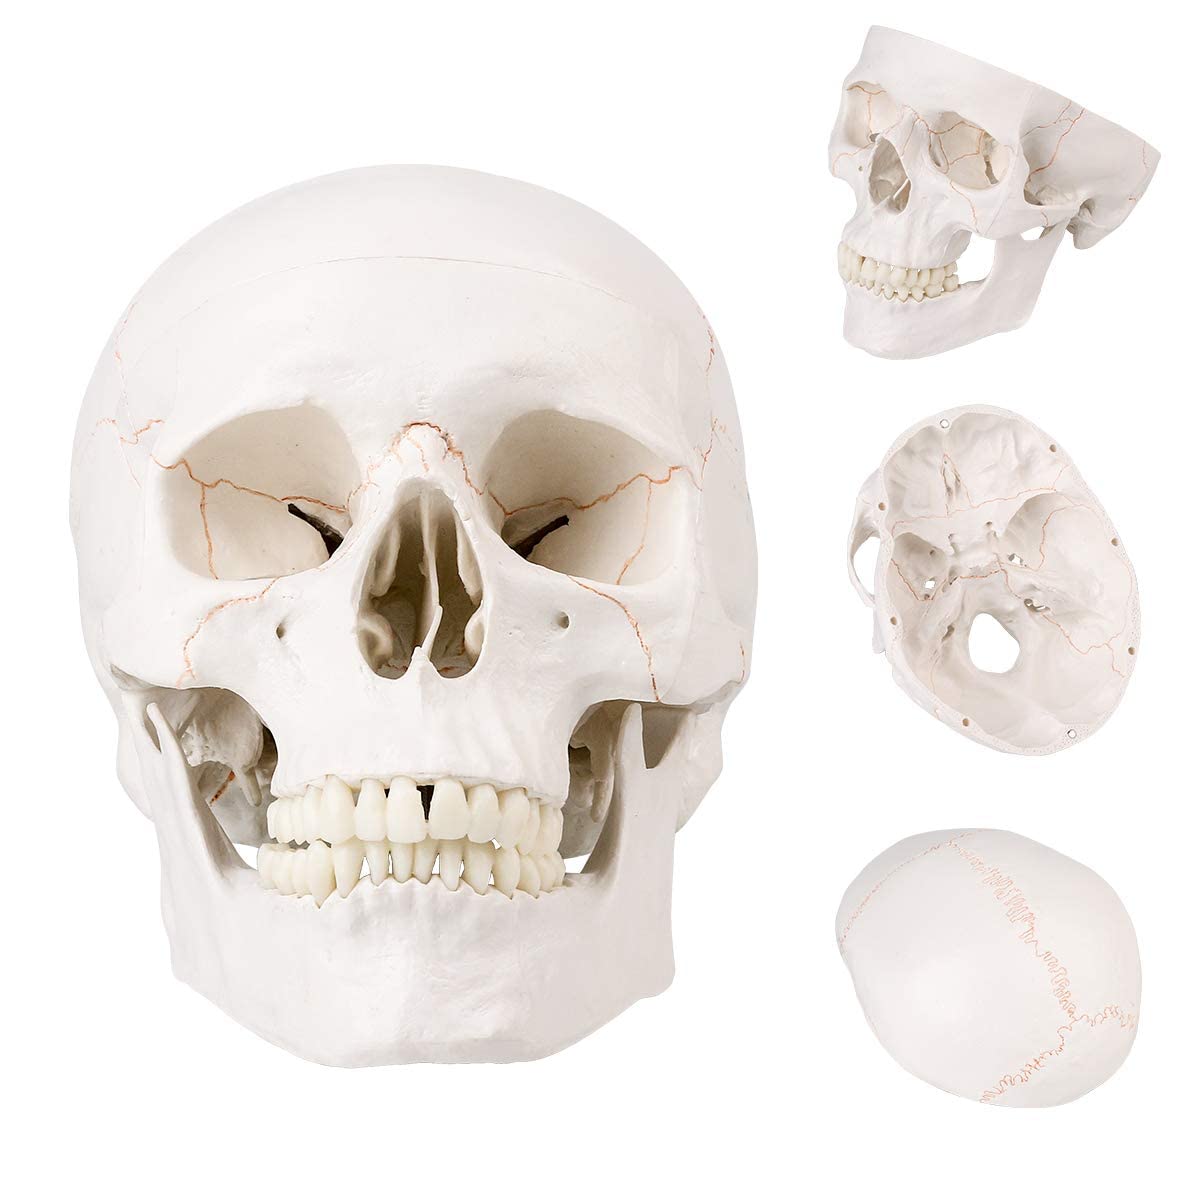 Life-size Anatomical 1:1 Teeth Skeleton Head Skull Replica Model